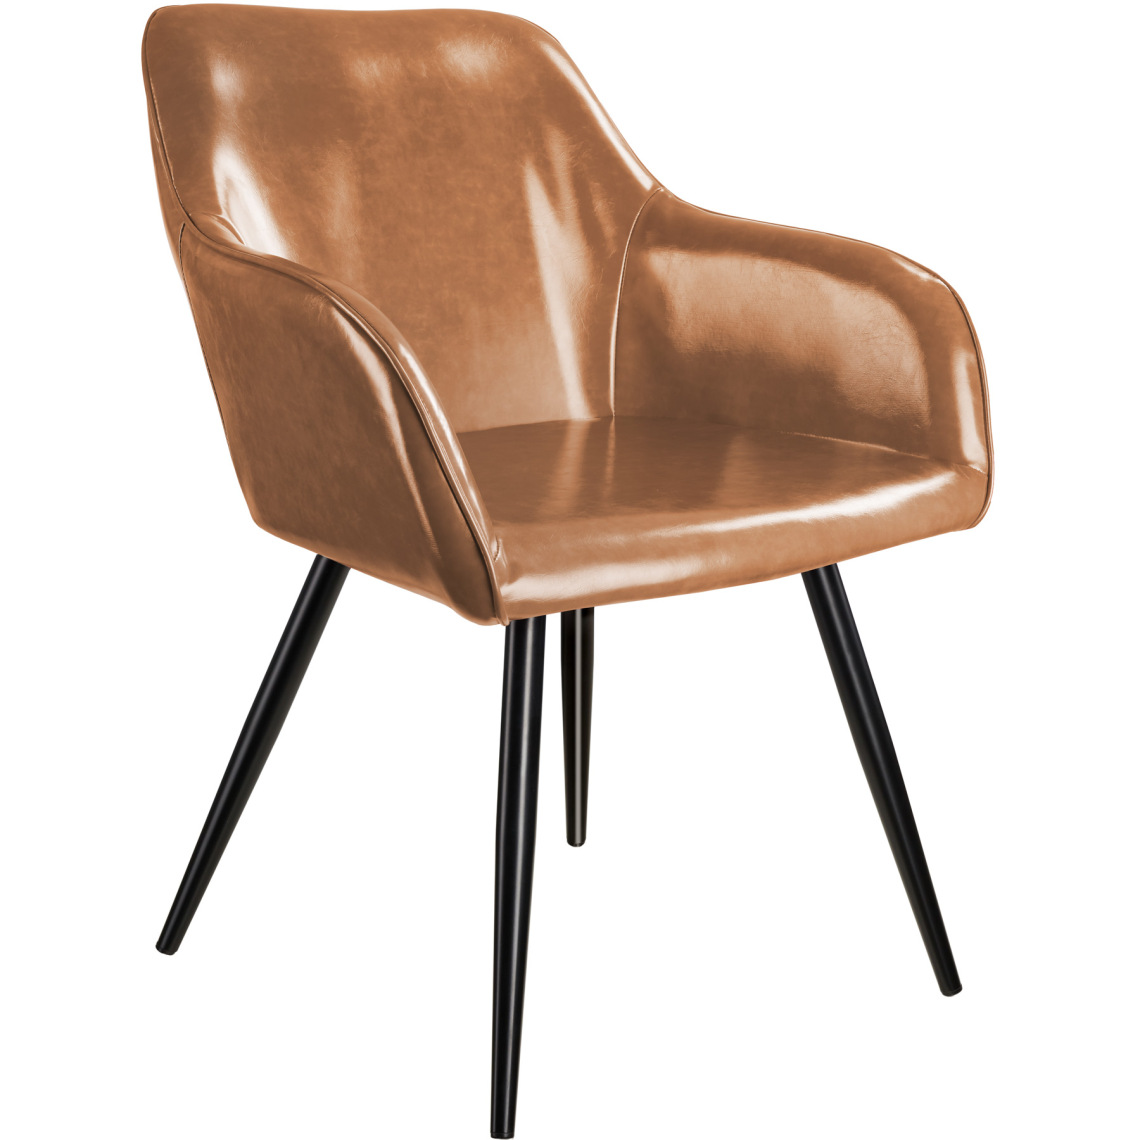 Tectake - Chaise Marilyn en cuir synthétique - brun-noir - Chaises